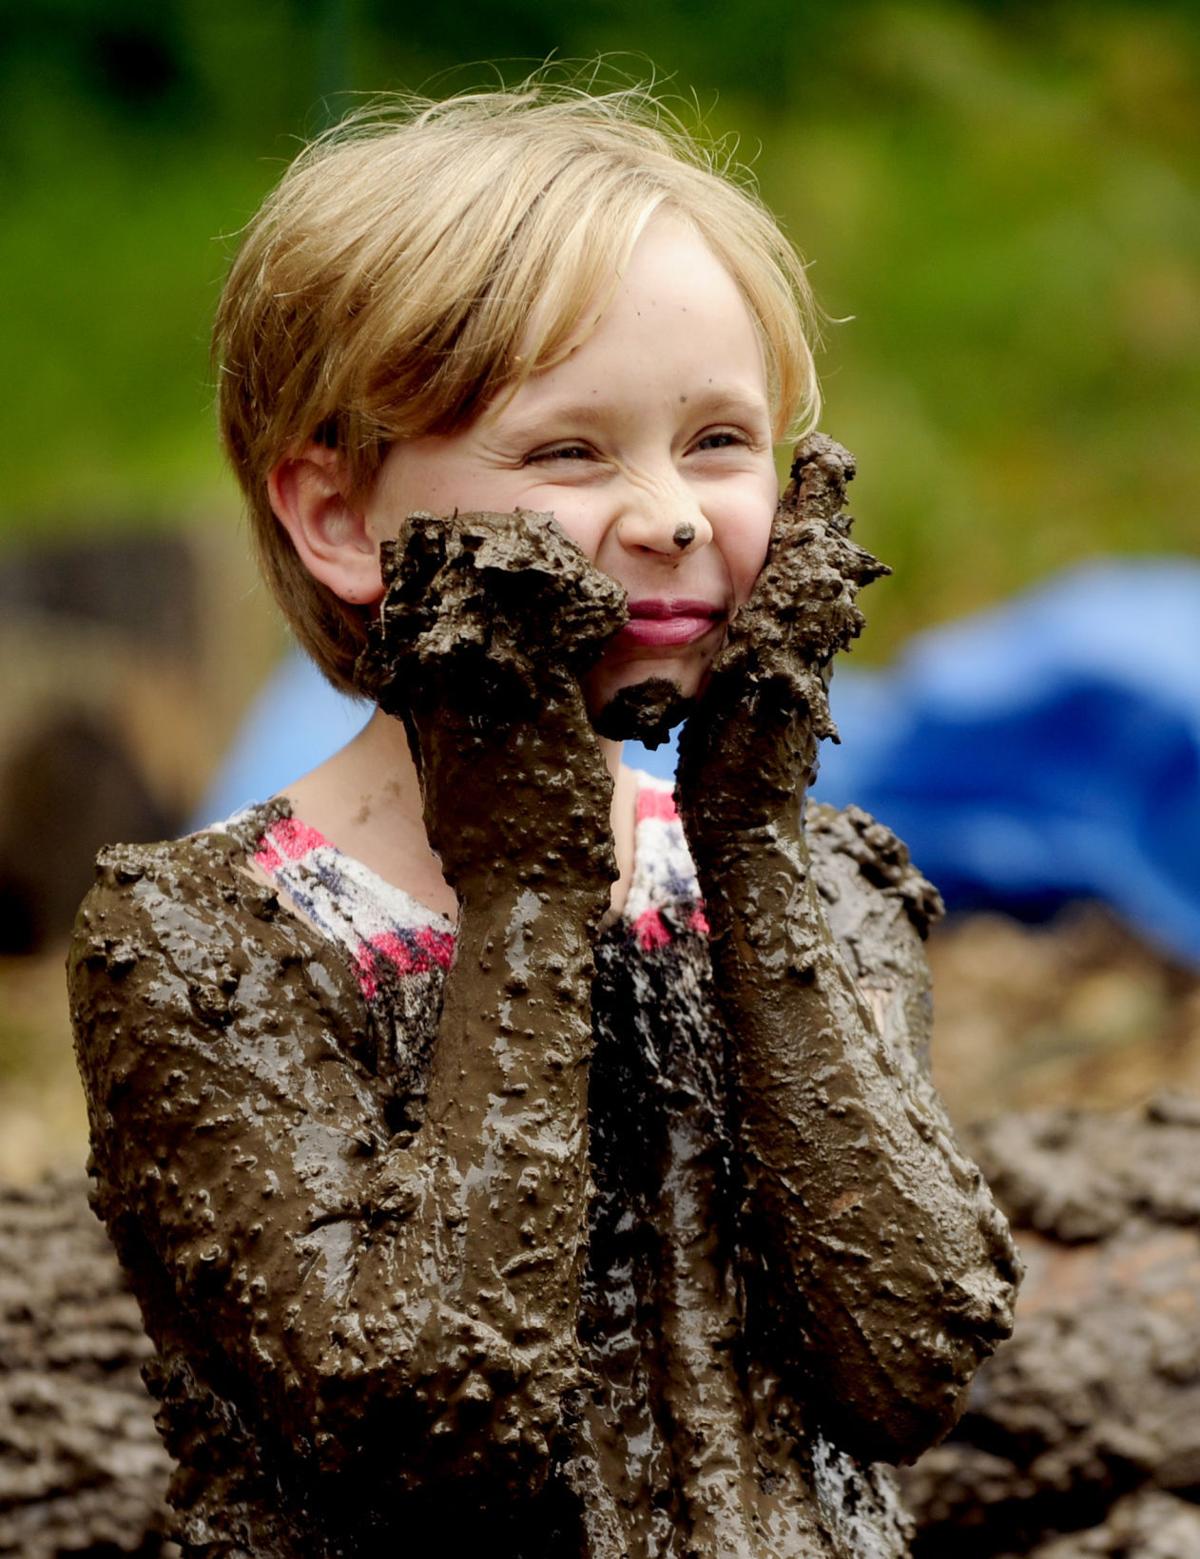 Getting muddy okay at Pringle Nature Center | Local News | kenoshanews.com